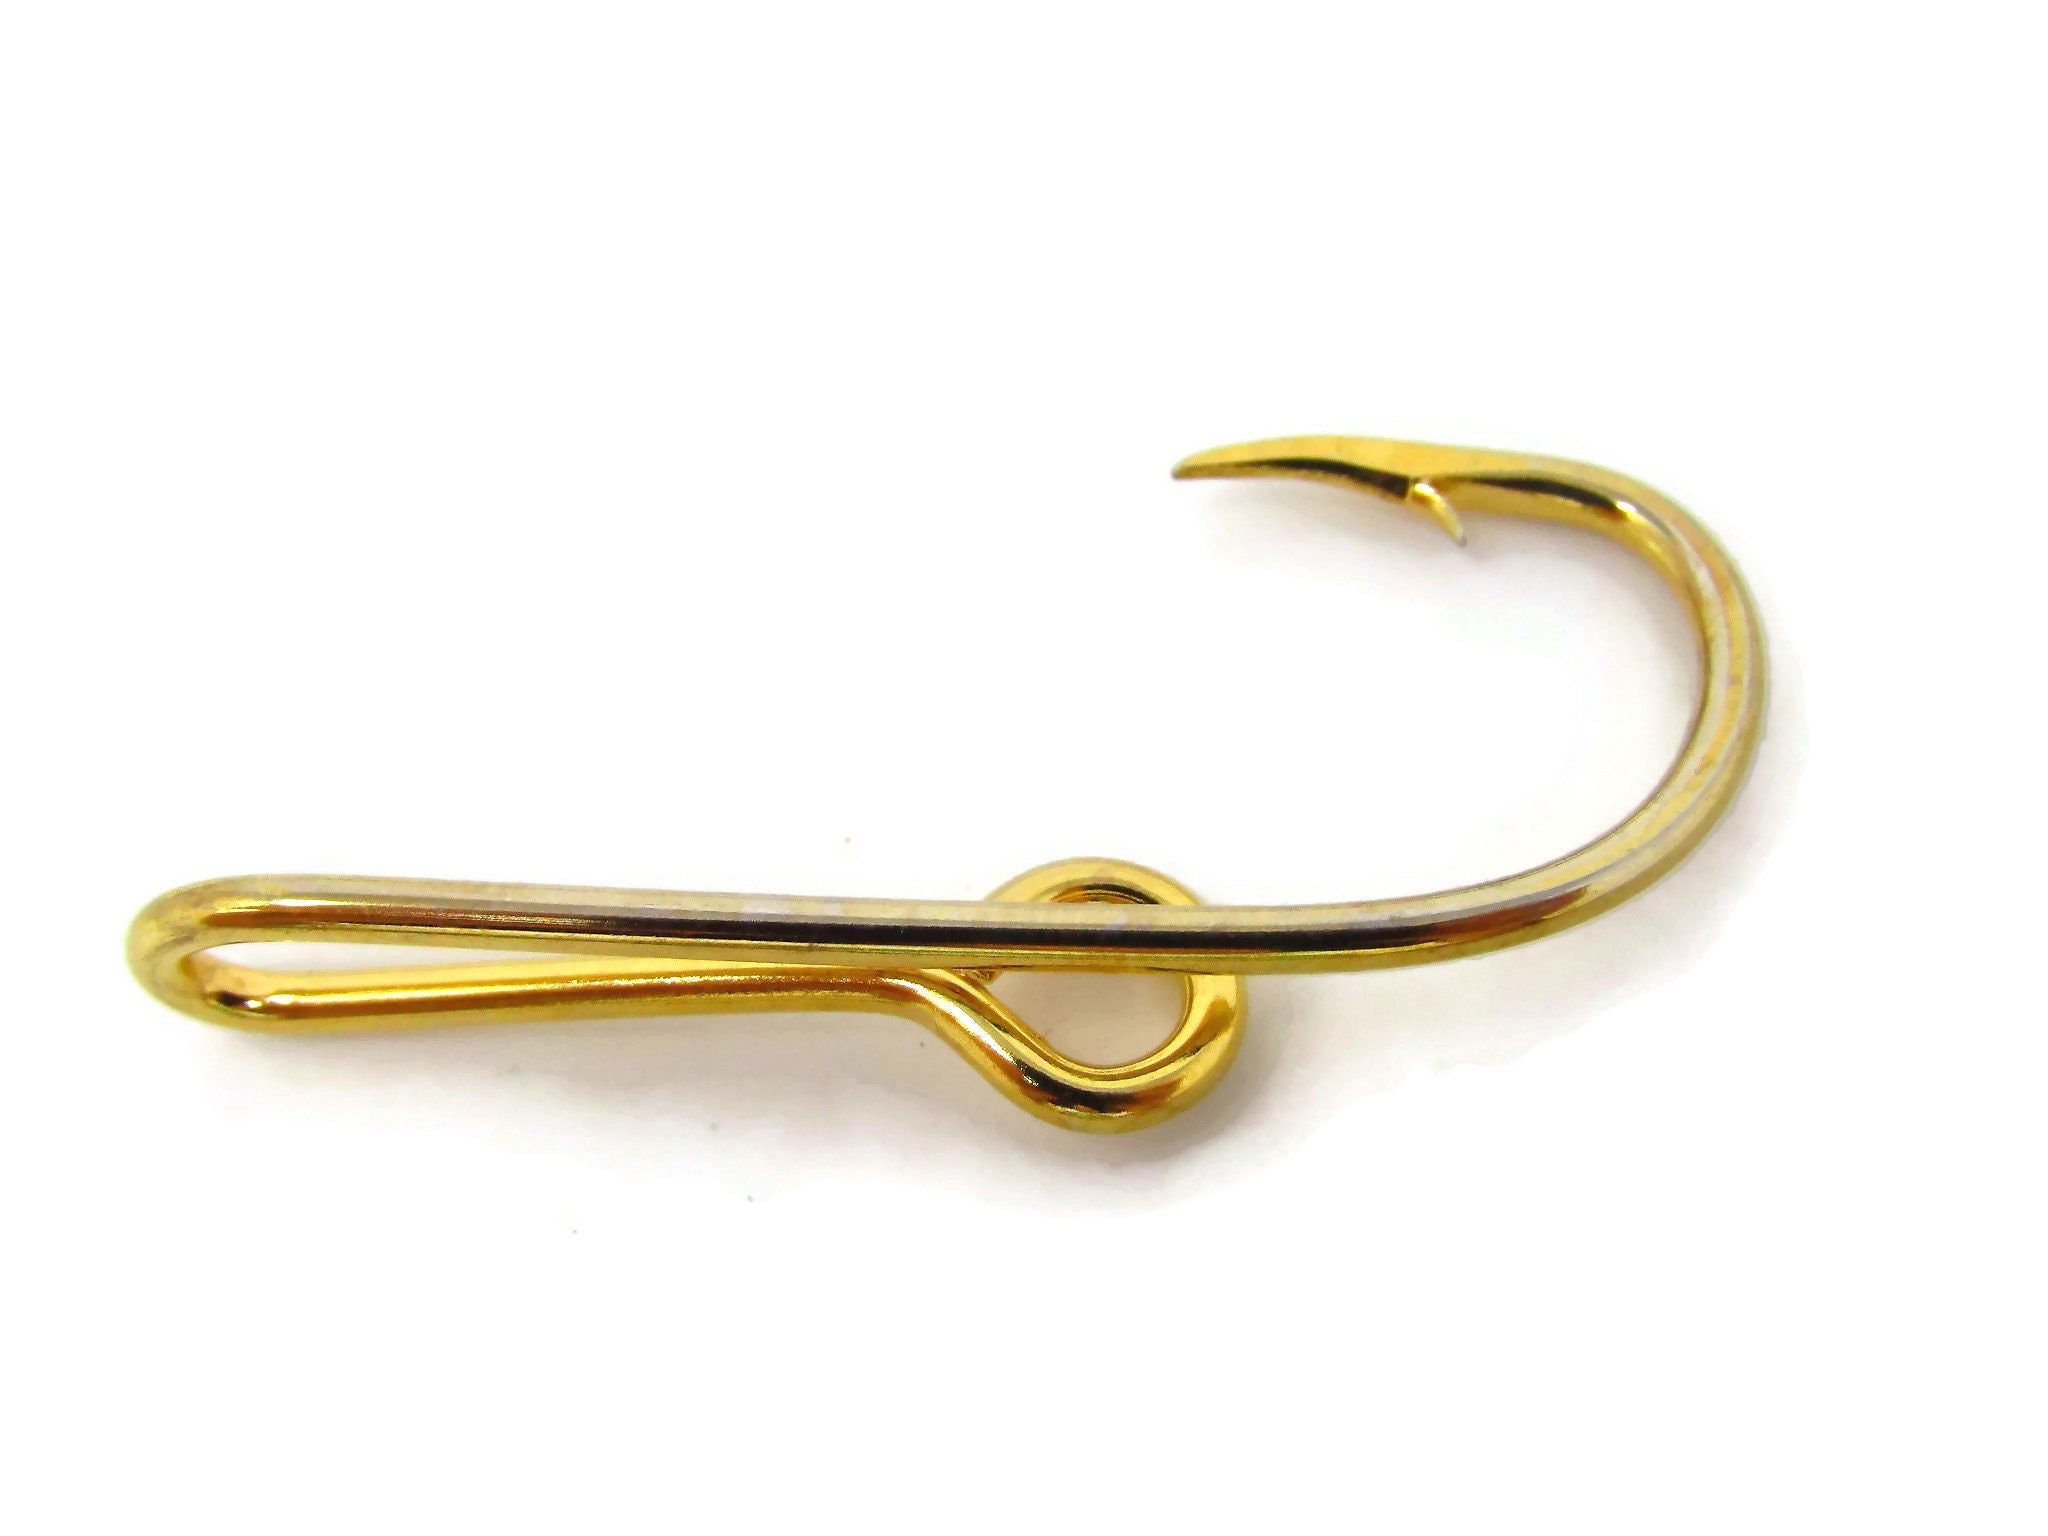 Vintage Tie Clip Tie Bar: Large Fish Hook Gold Tone